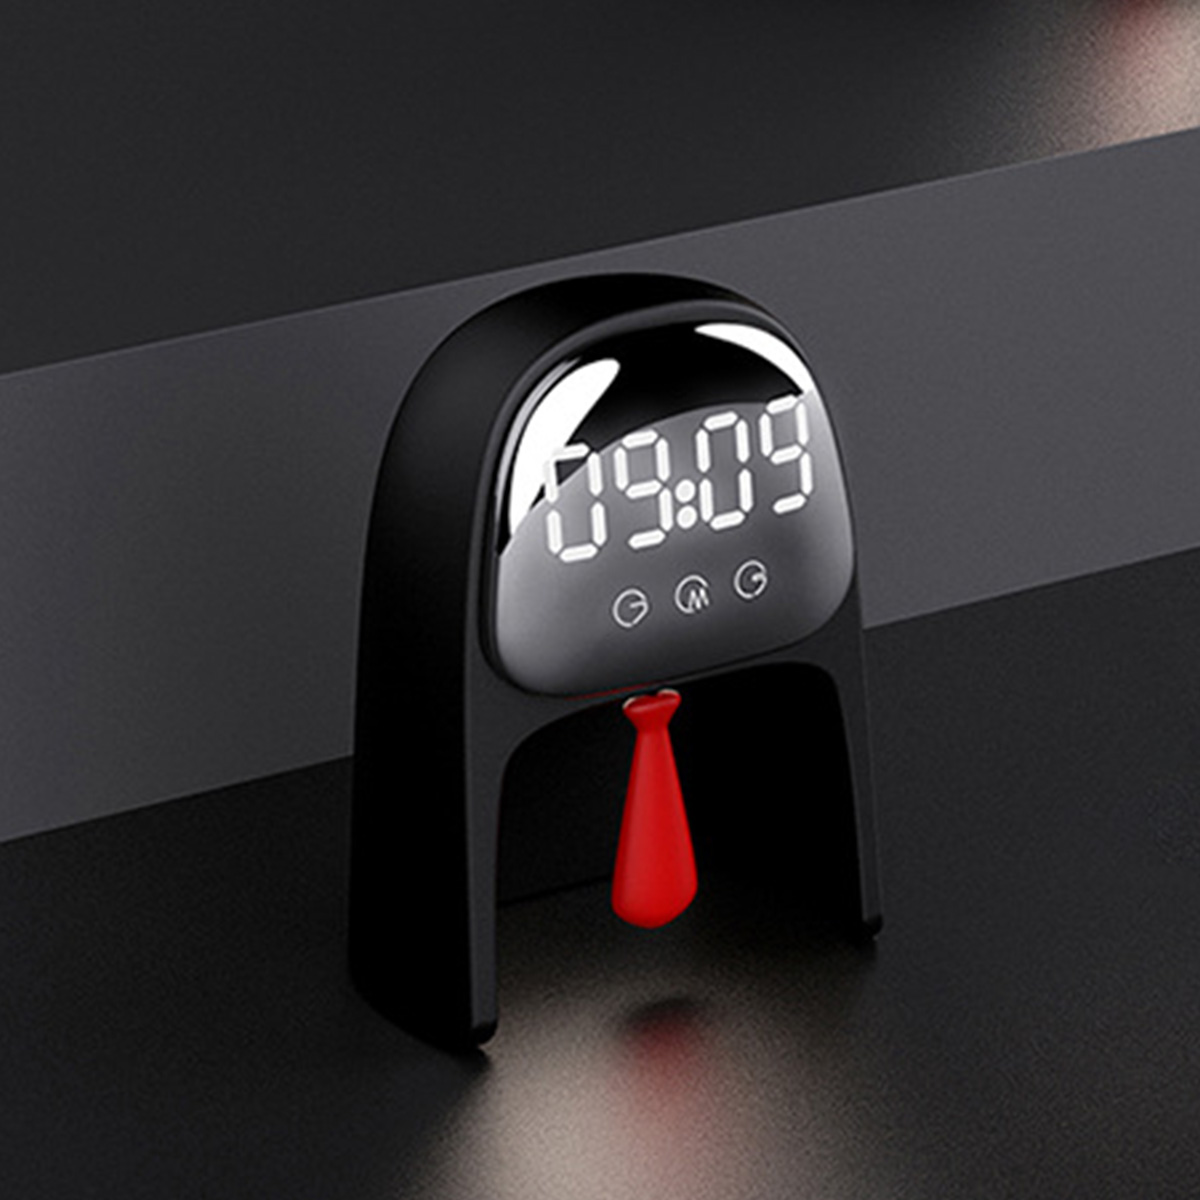 

Creative Design Gentleman Alarm Clock Digital Snooze Table Clock Voice Induction Function Press Control Home Decoration Clock